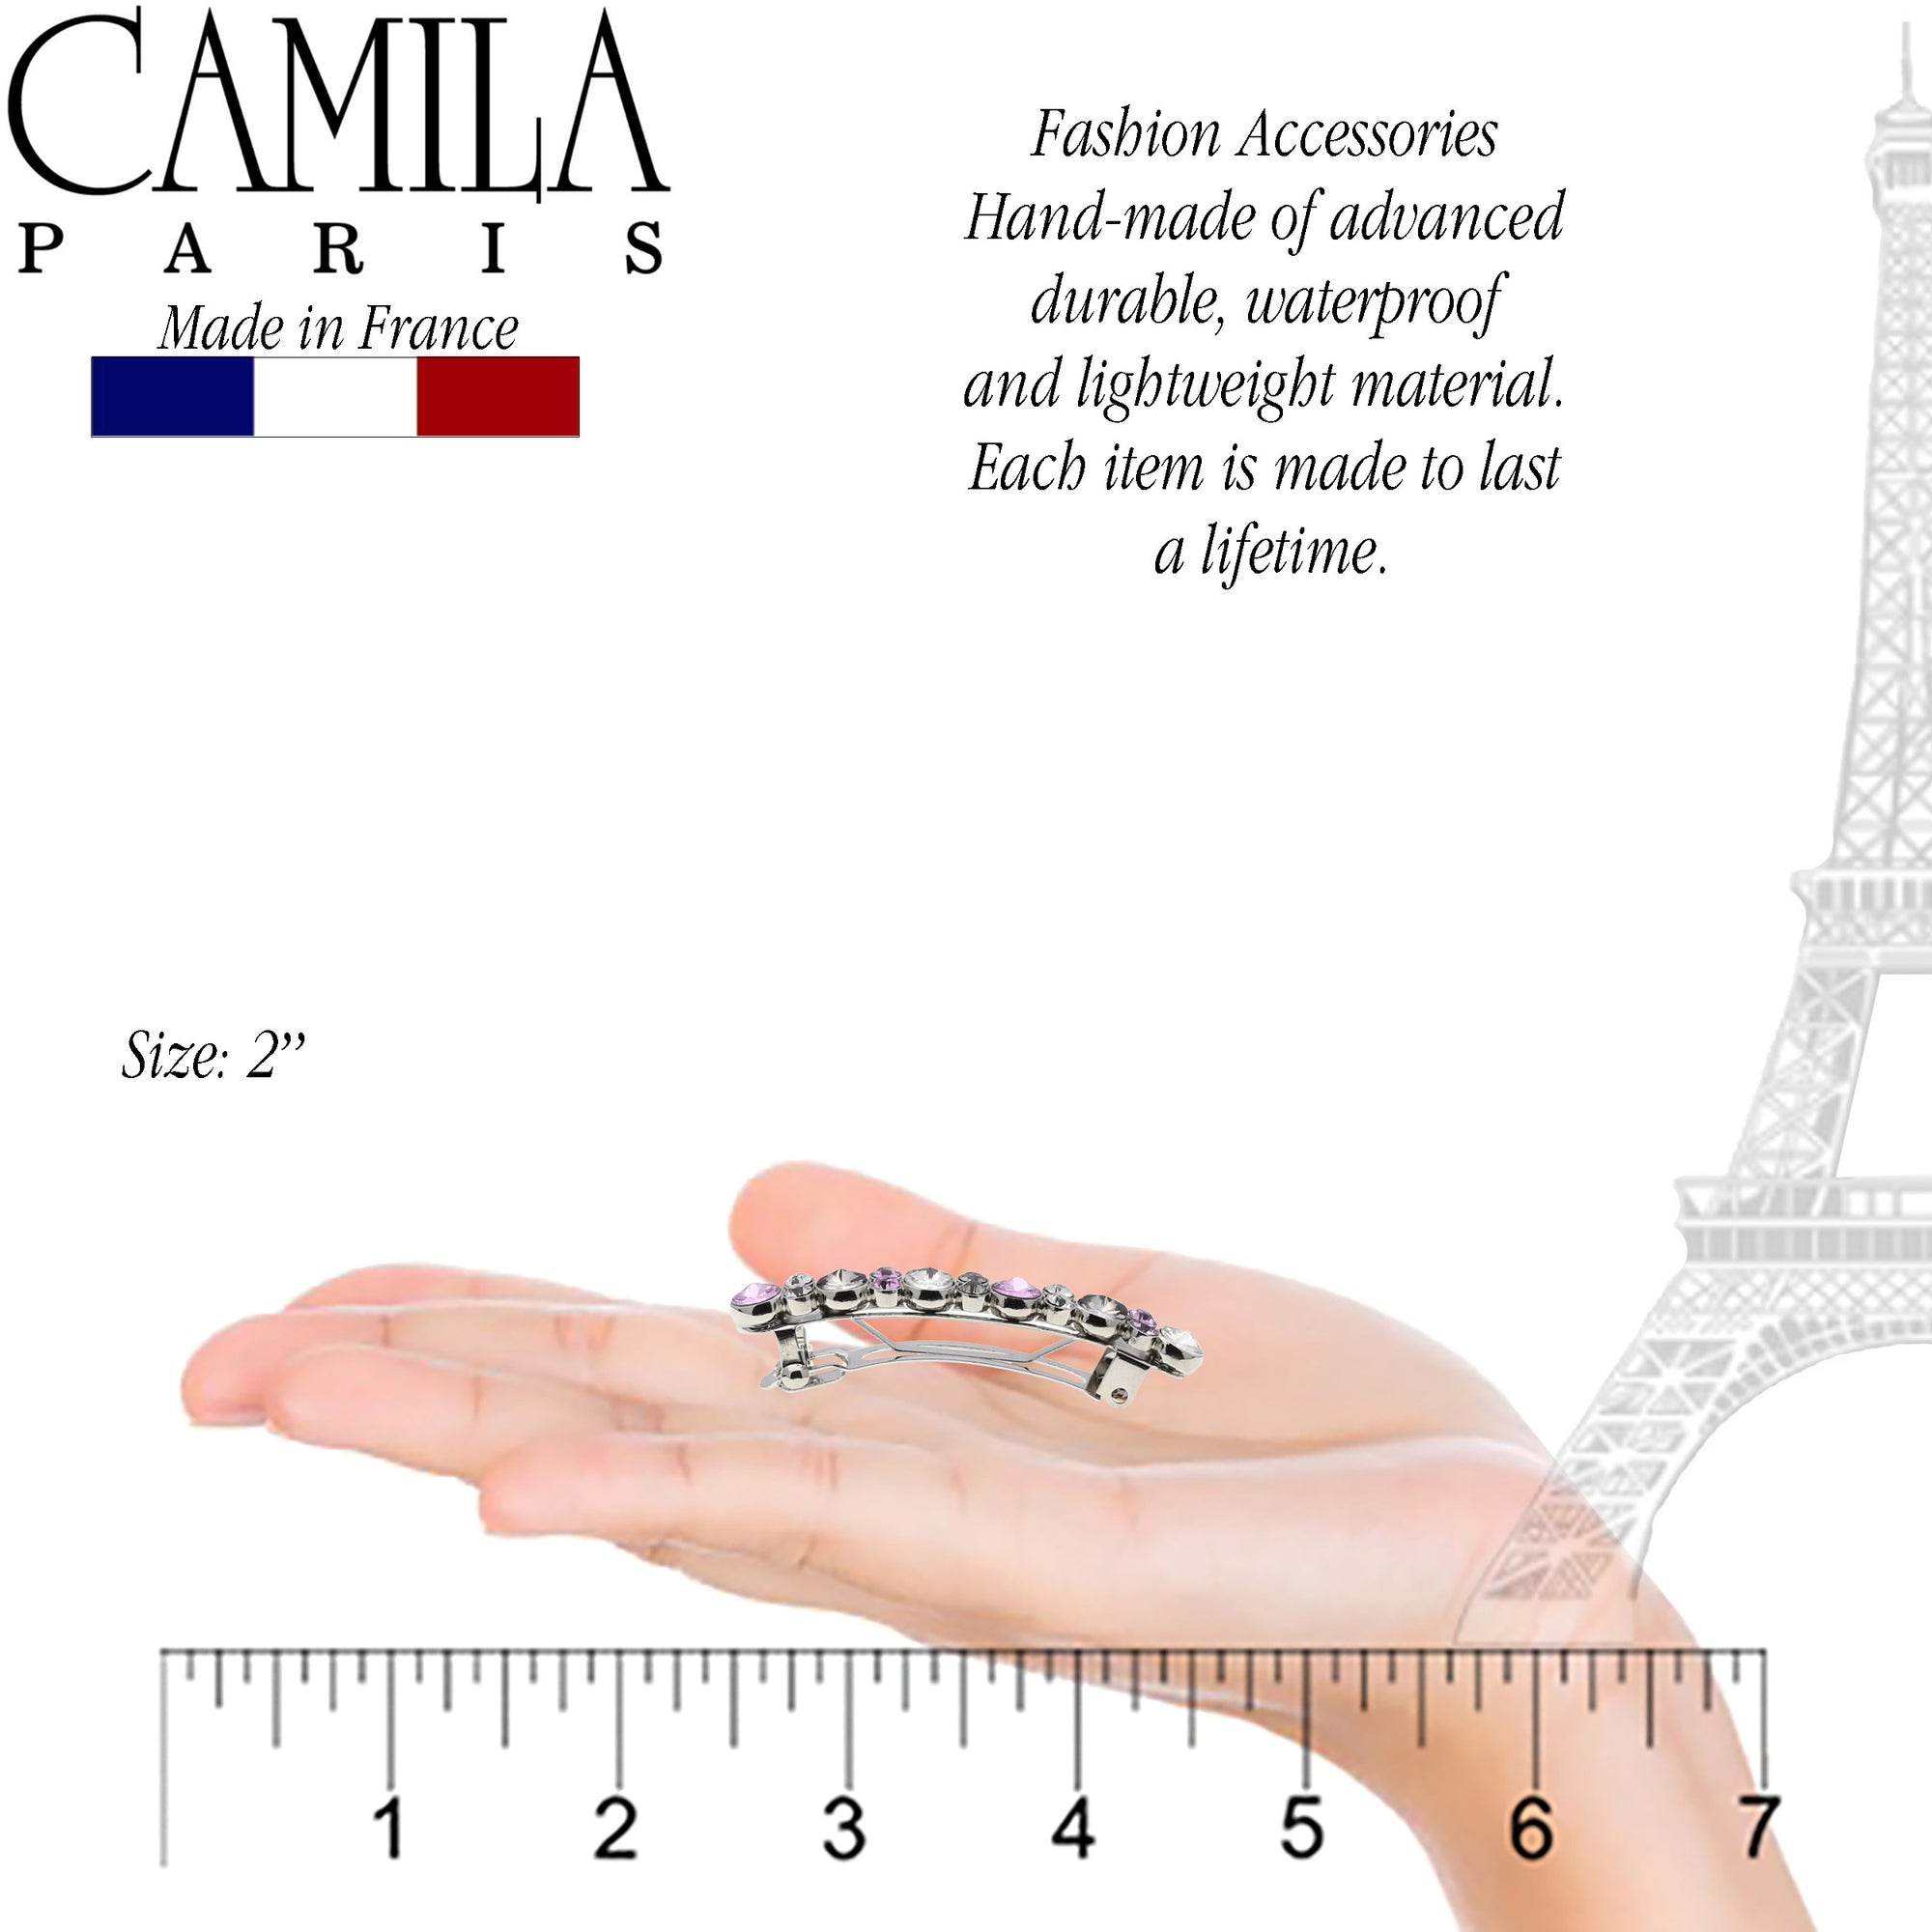 Camila Paris Small Silver Hair Barrette Clip with Swarovski Crystals (2")